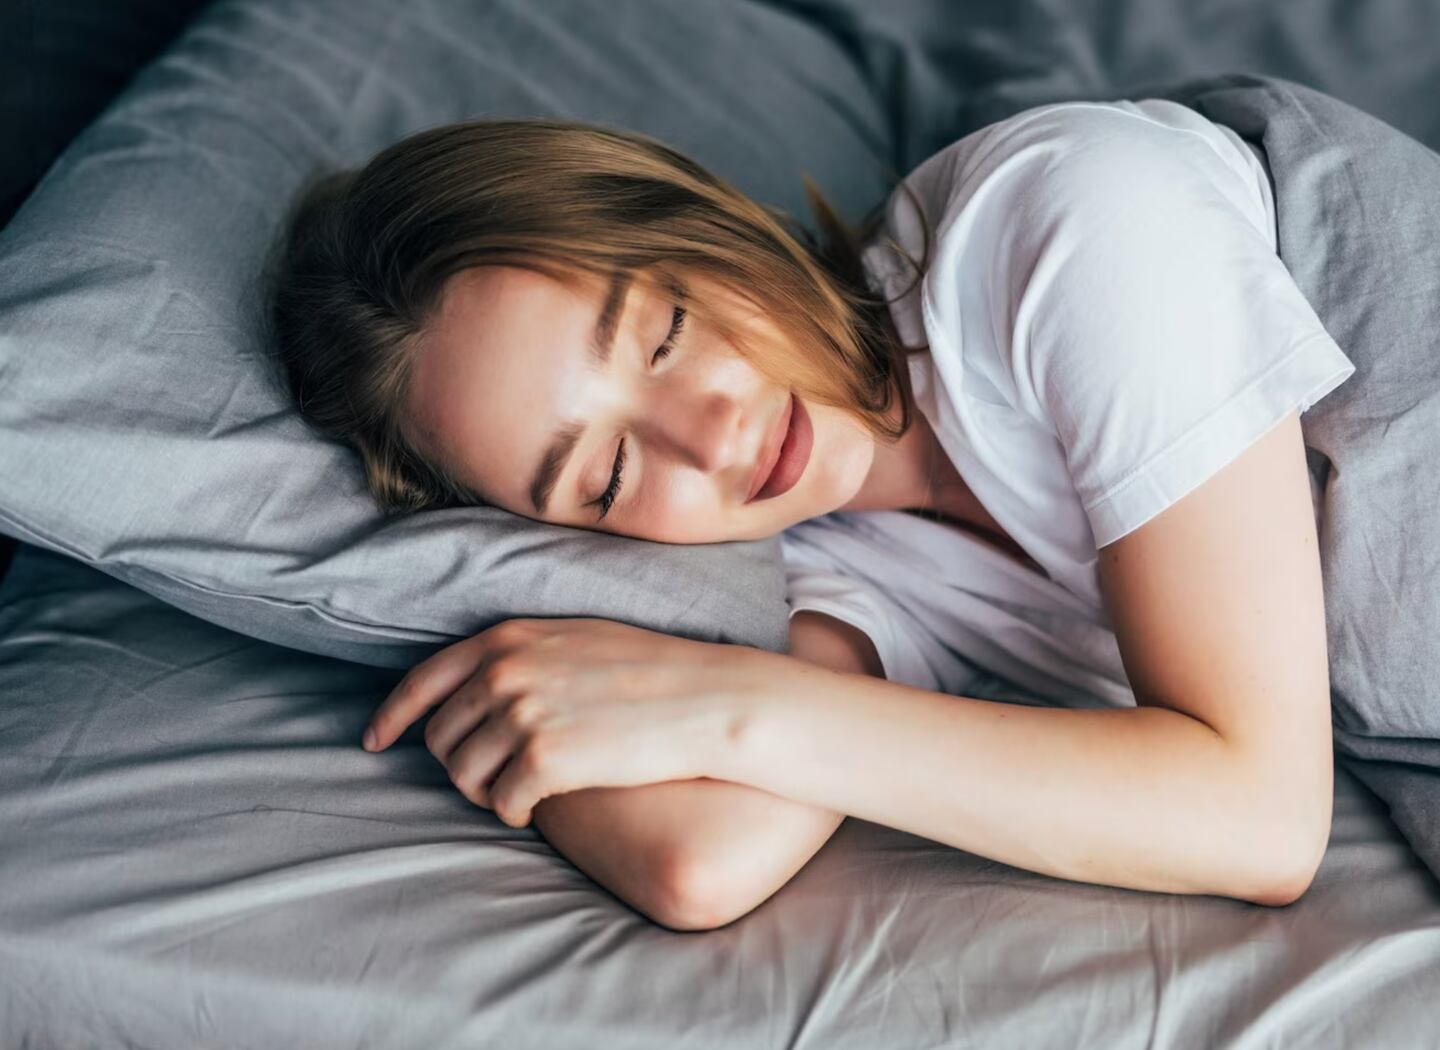 Sleeping well is essential to keep us functional